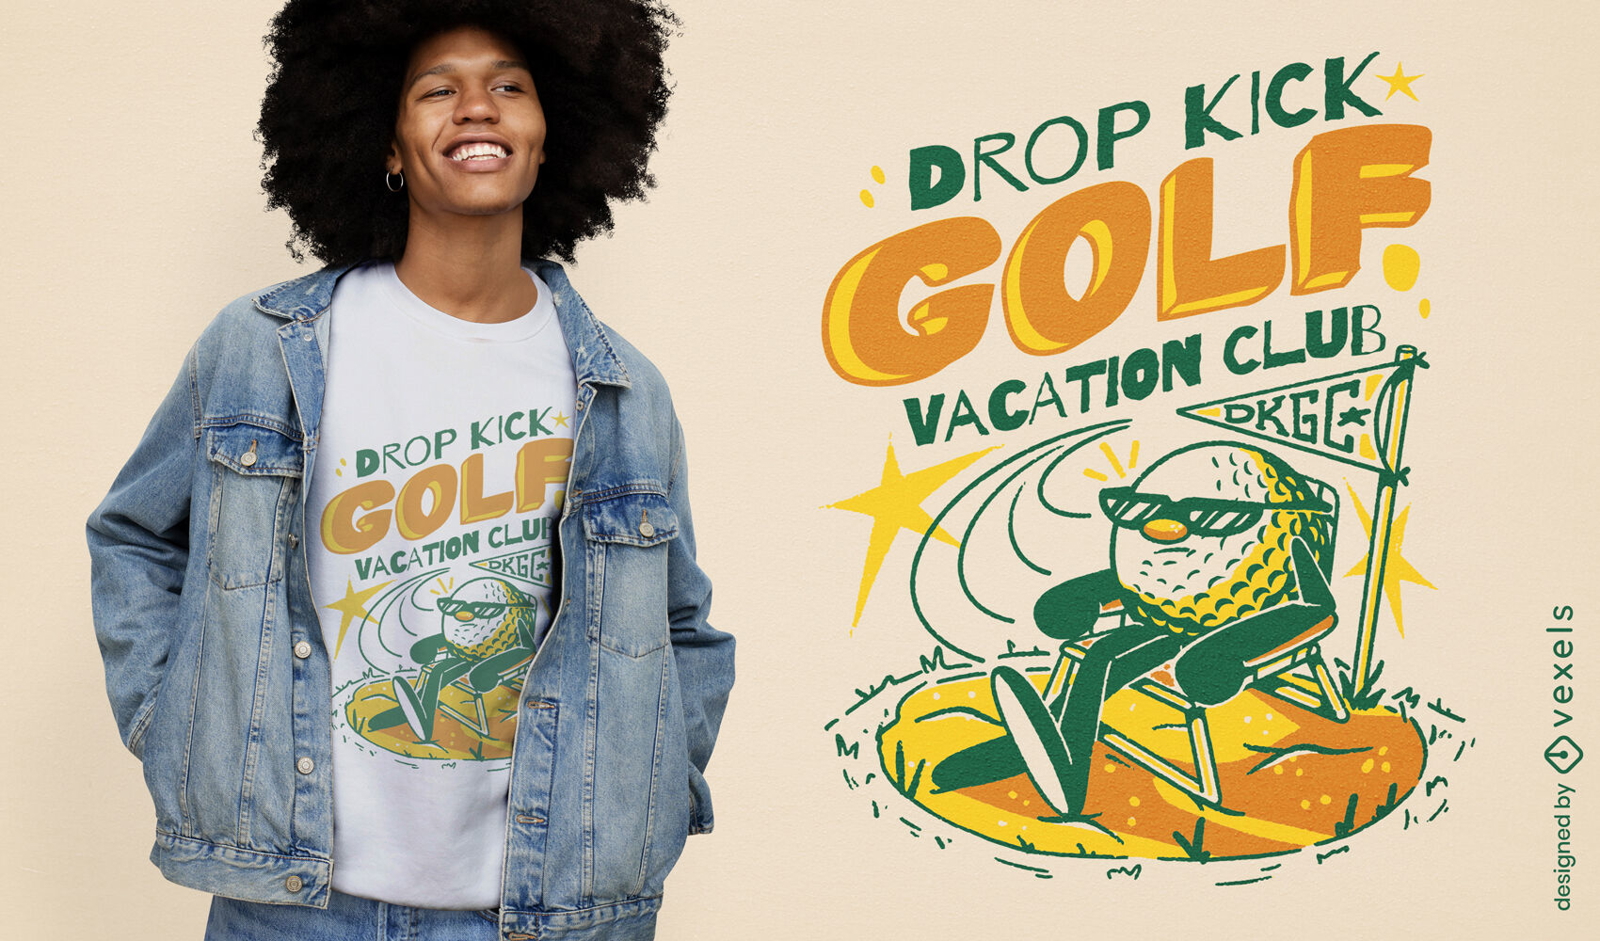 Drop kick golf vacation club t-shirt design